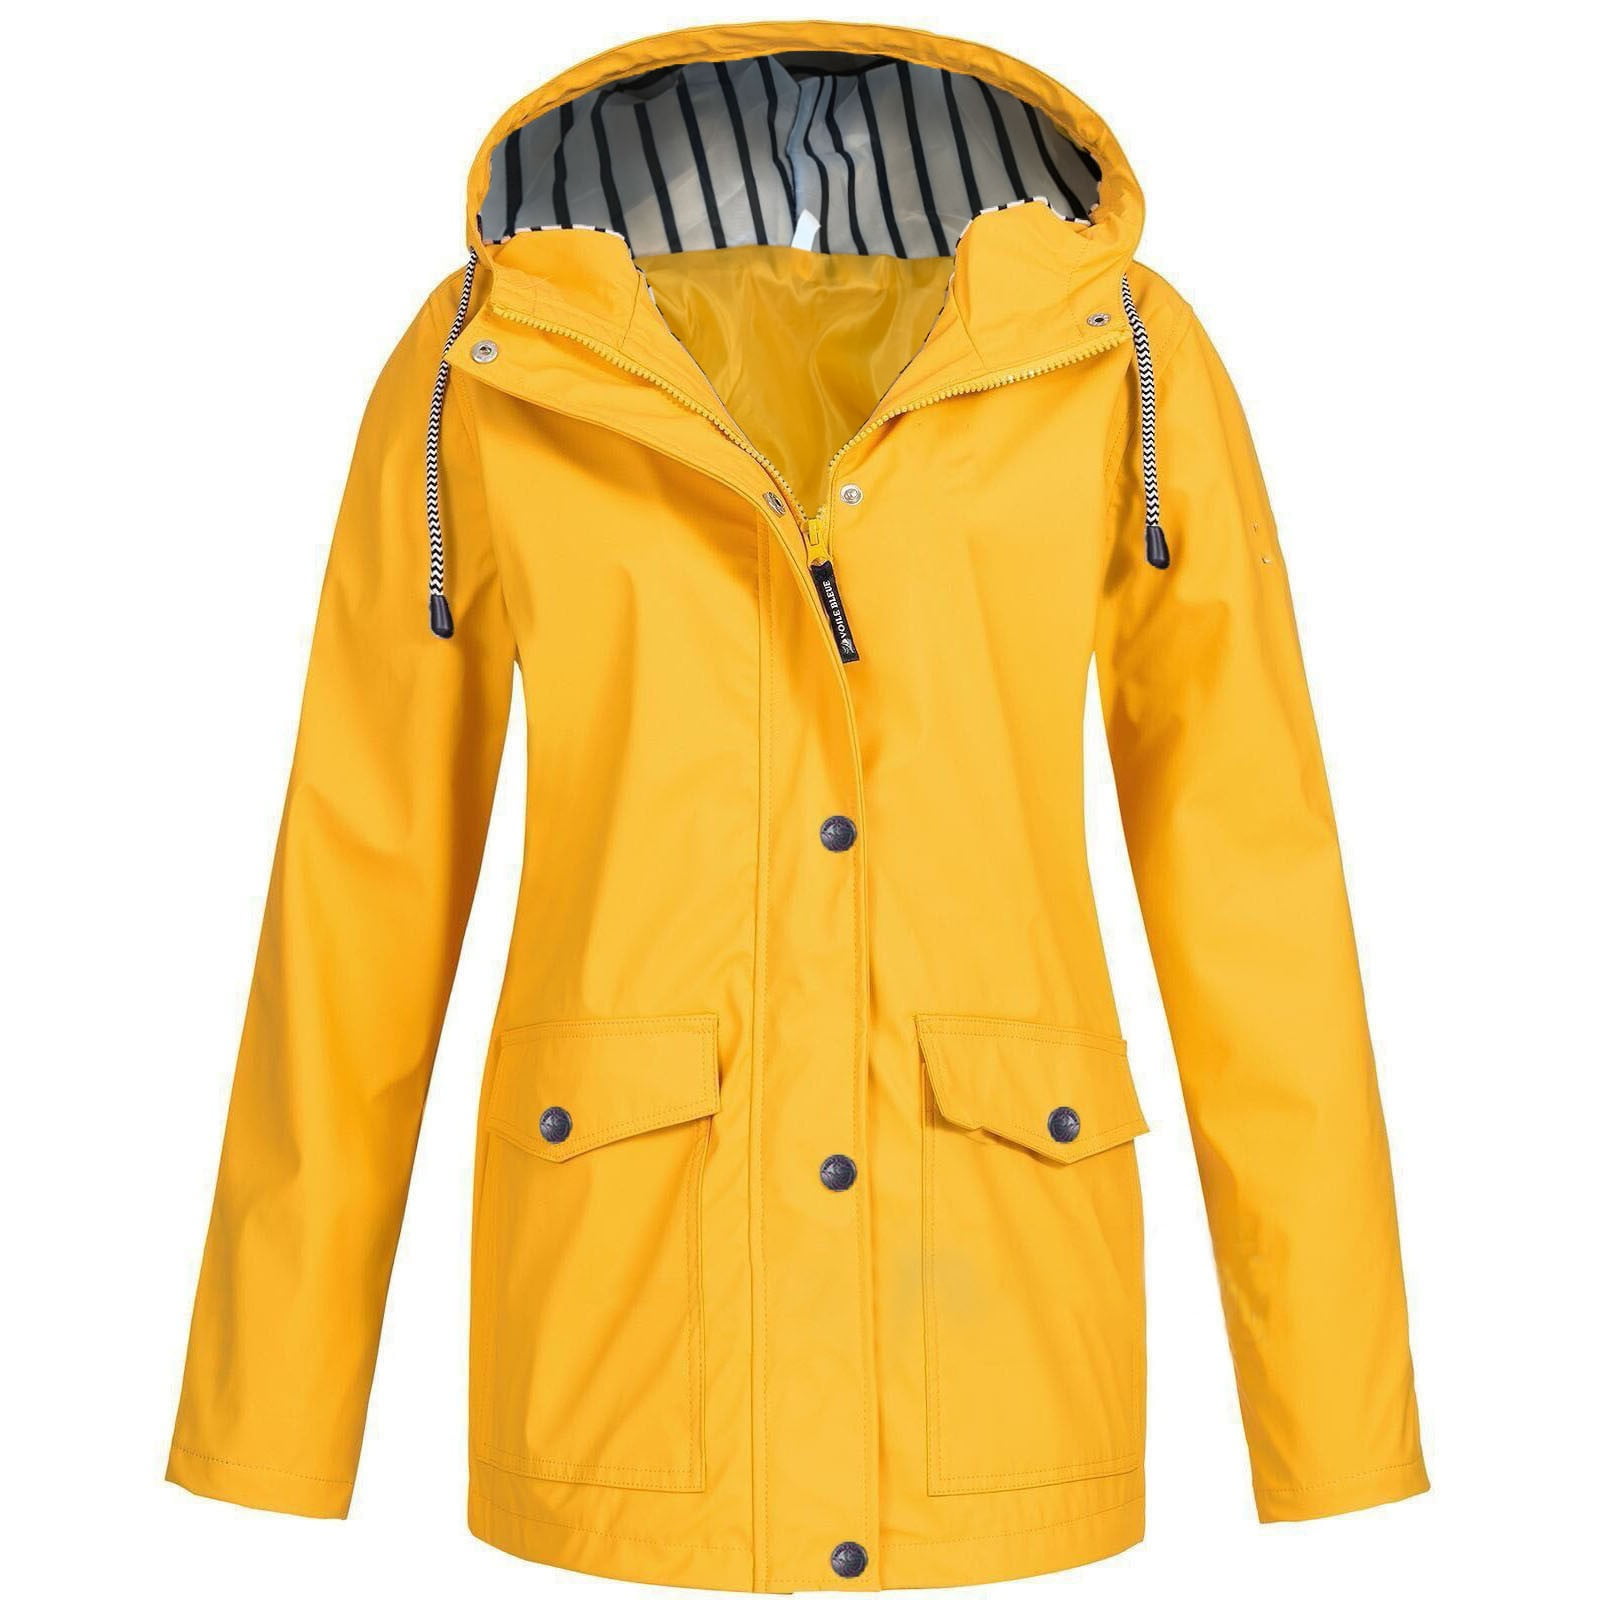 AOOCHASLIY Women Solid Rain Jacket Outdoor Plus Size Hooded Raincoat ...